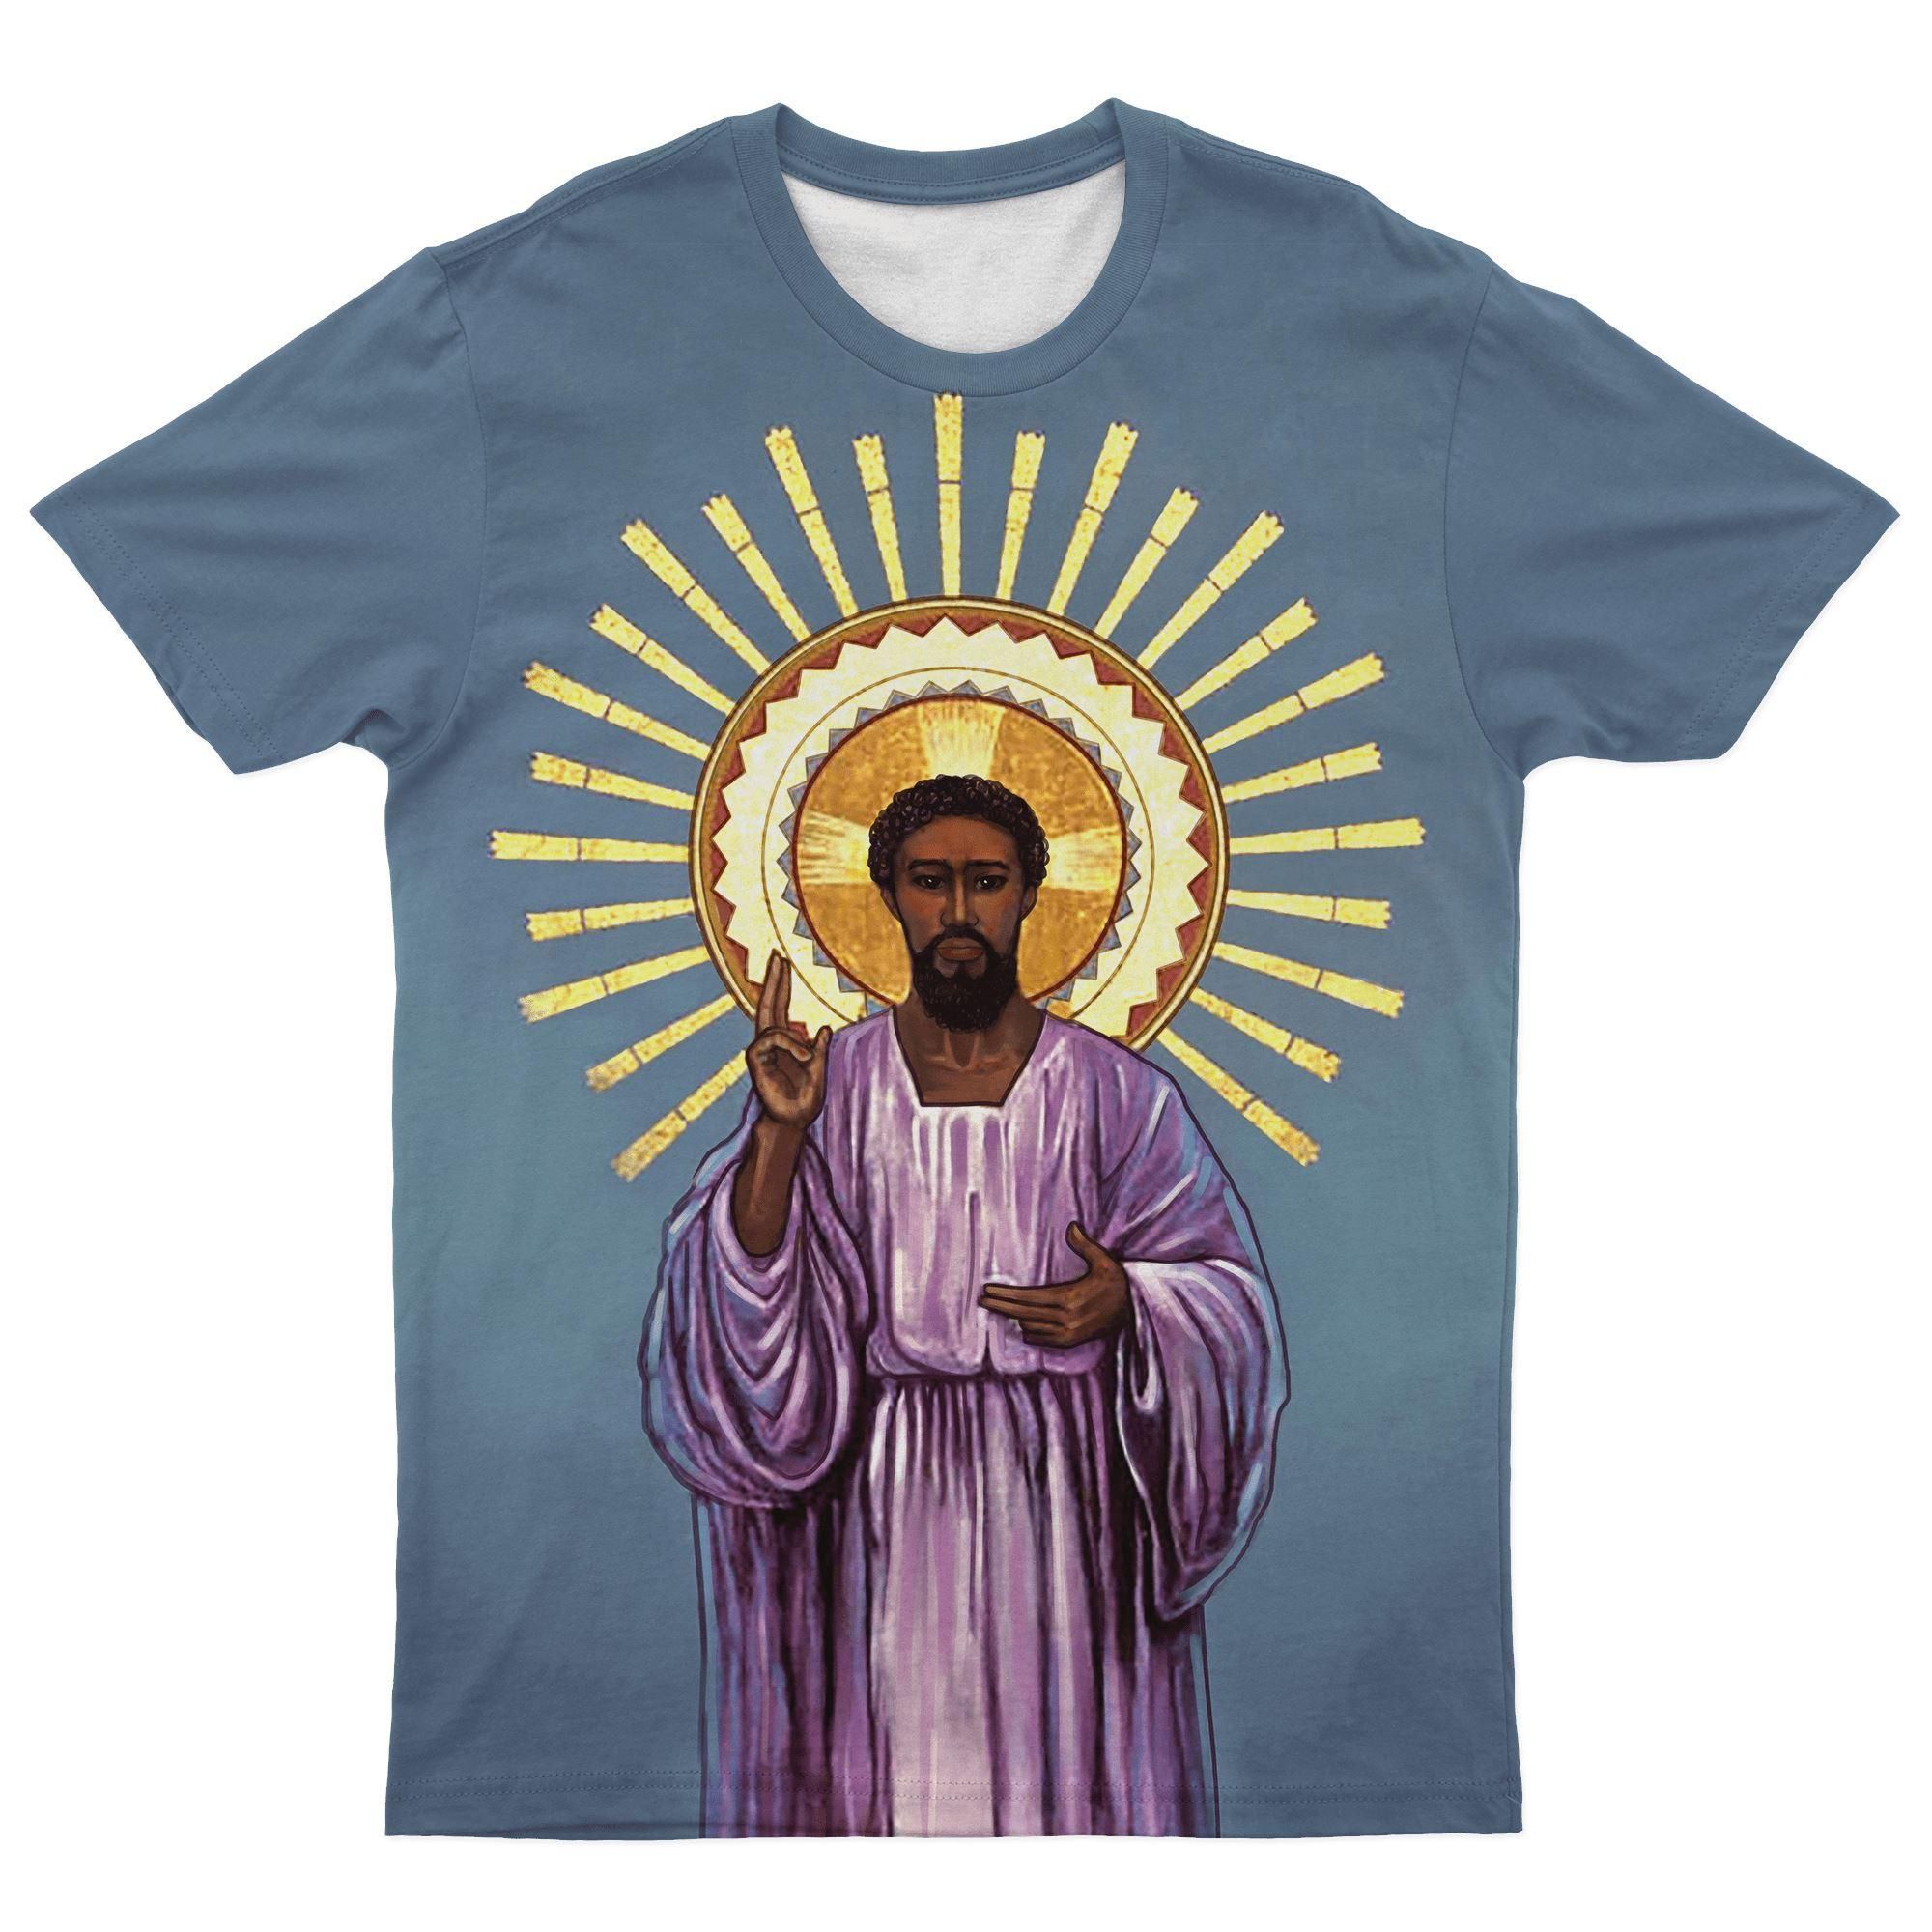 Jesus Was Black T-shirt